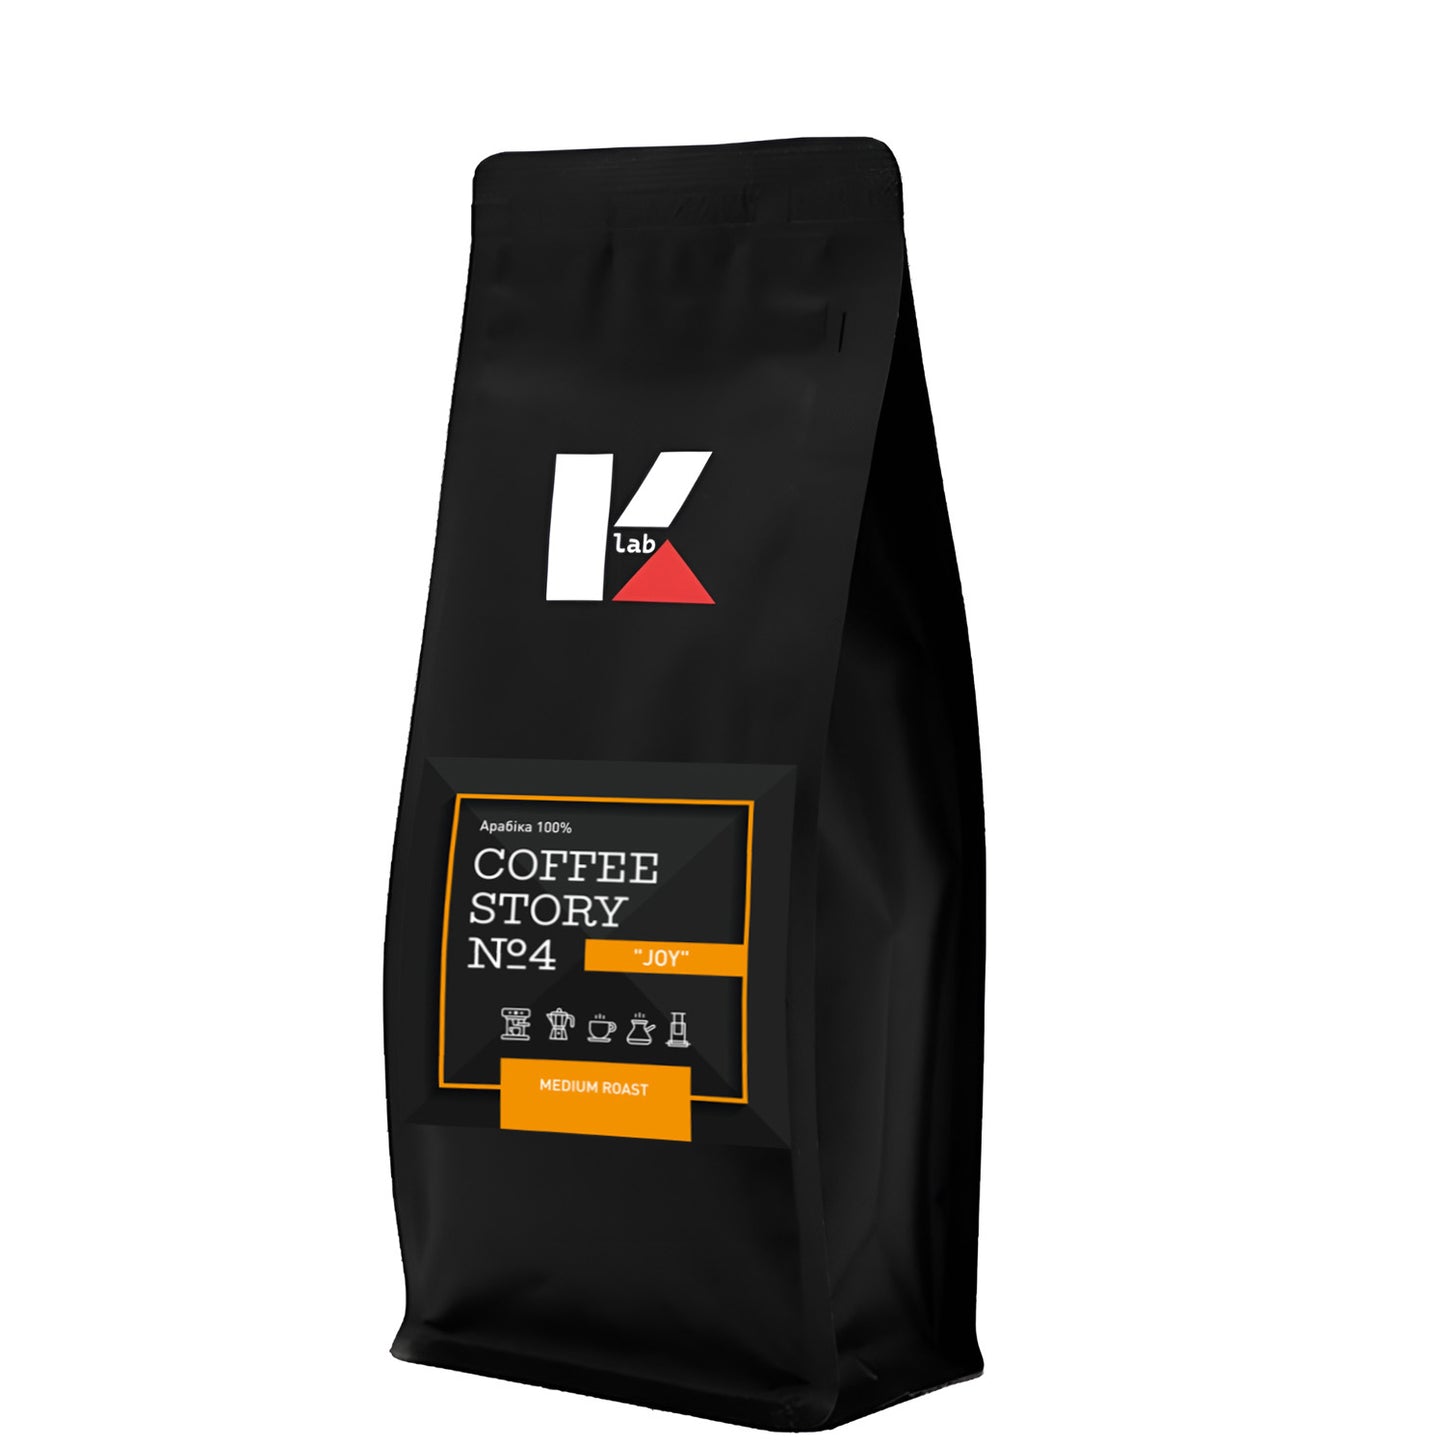 COFFEE STORY №4 - Klab (1kg front)